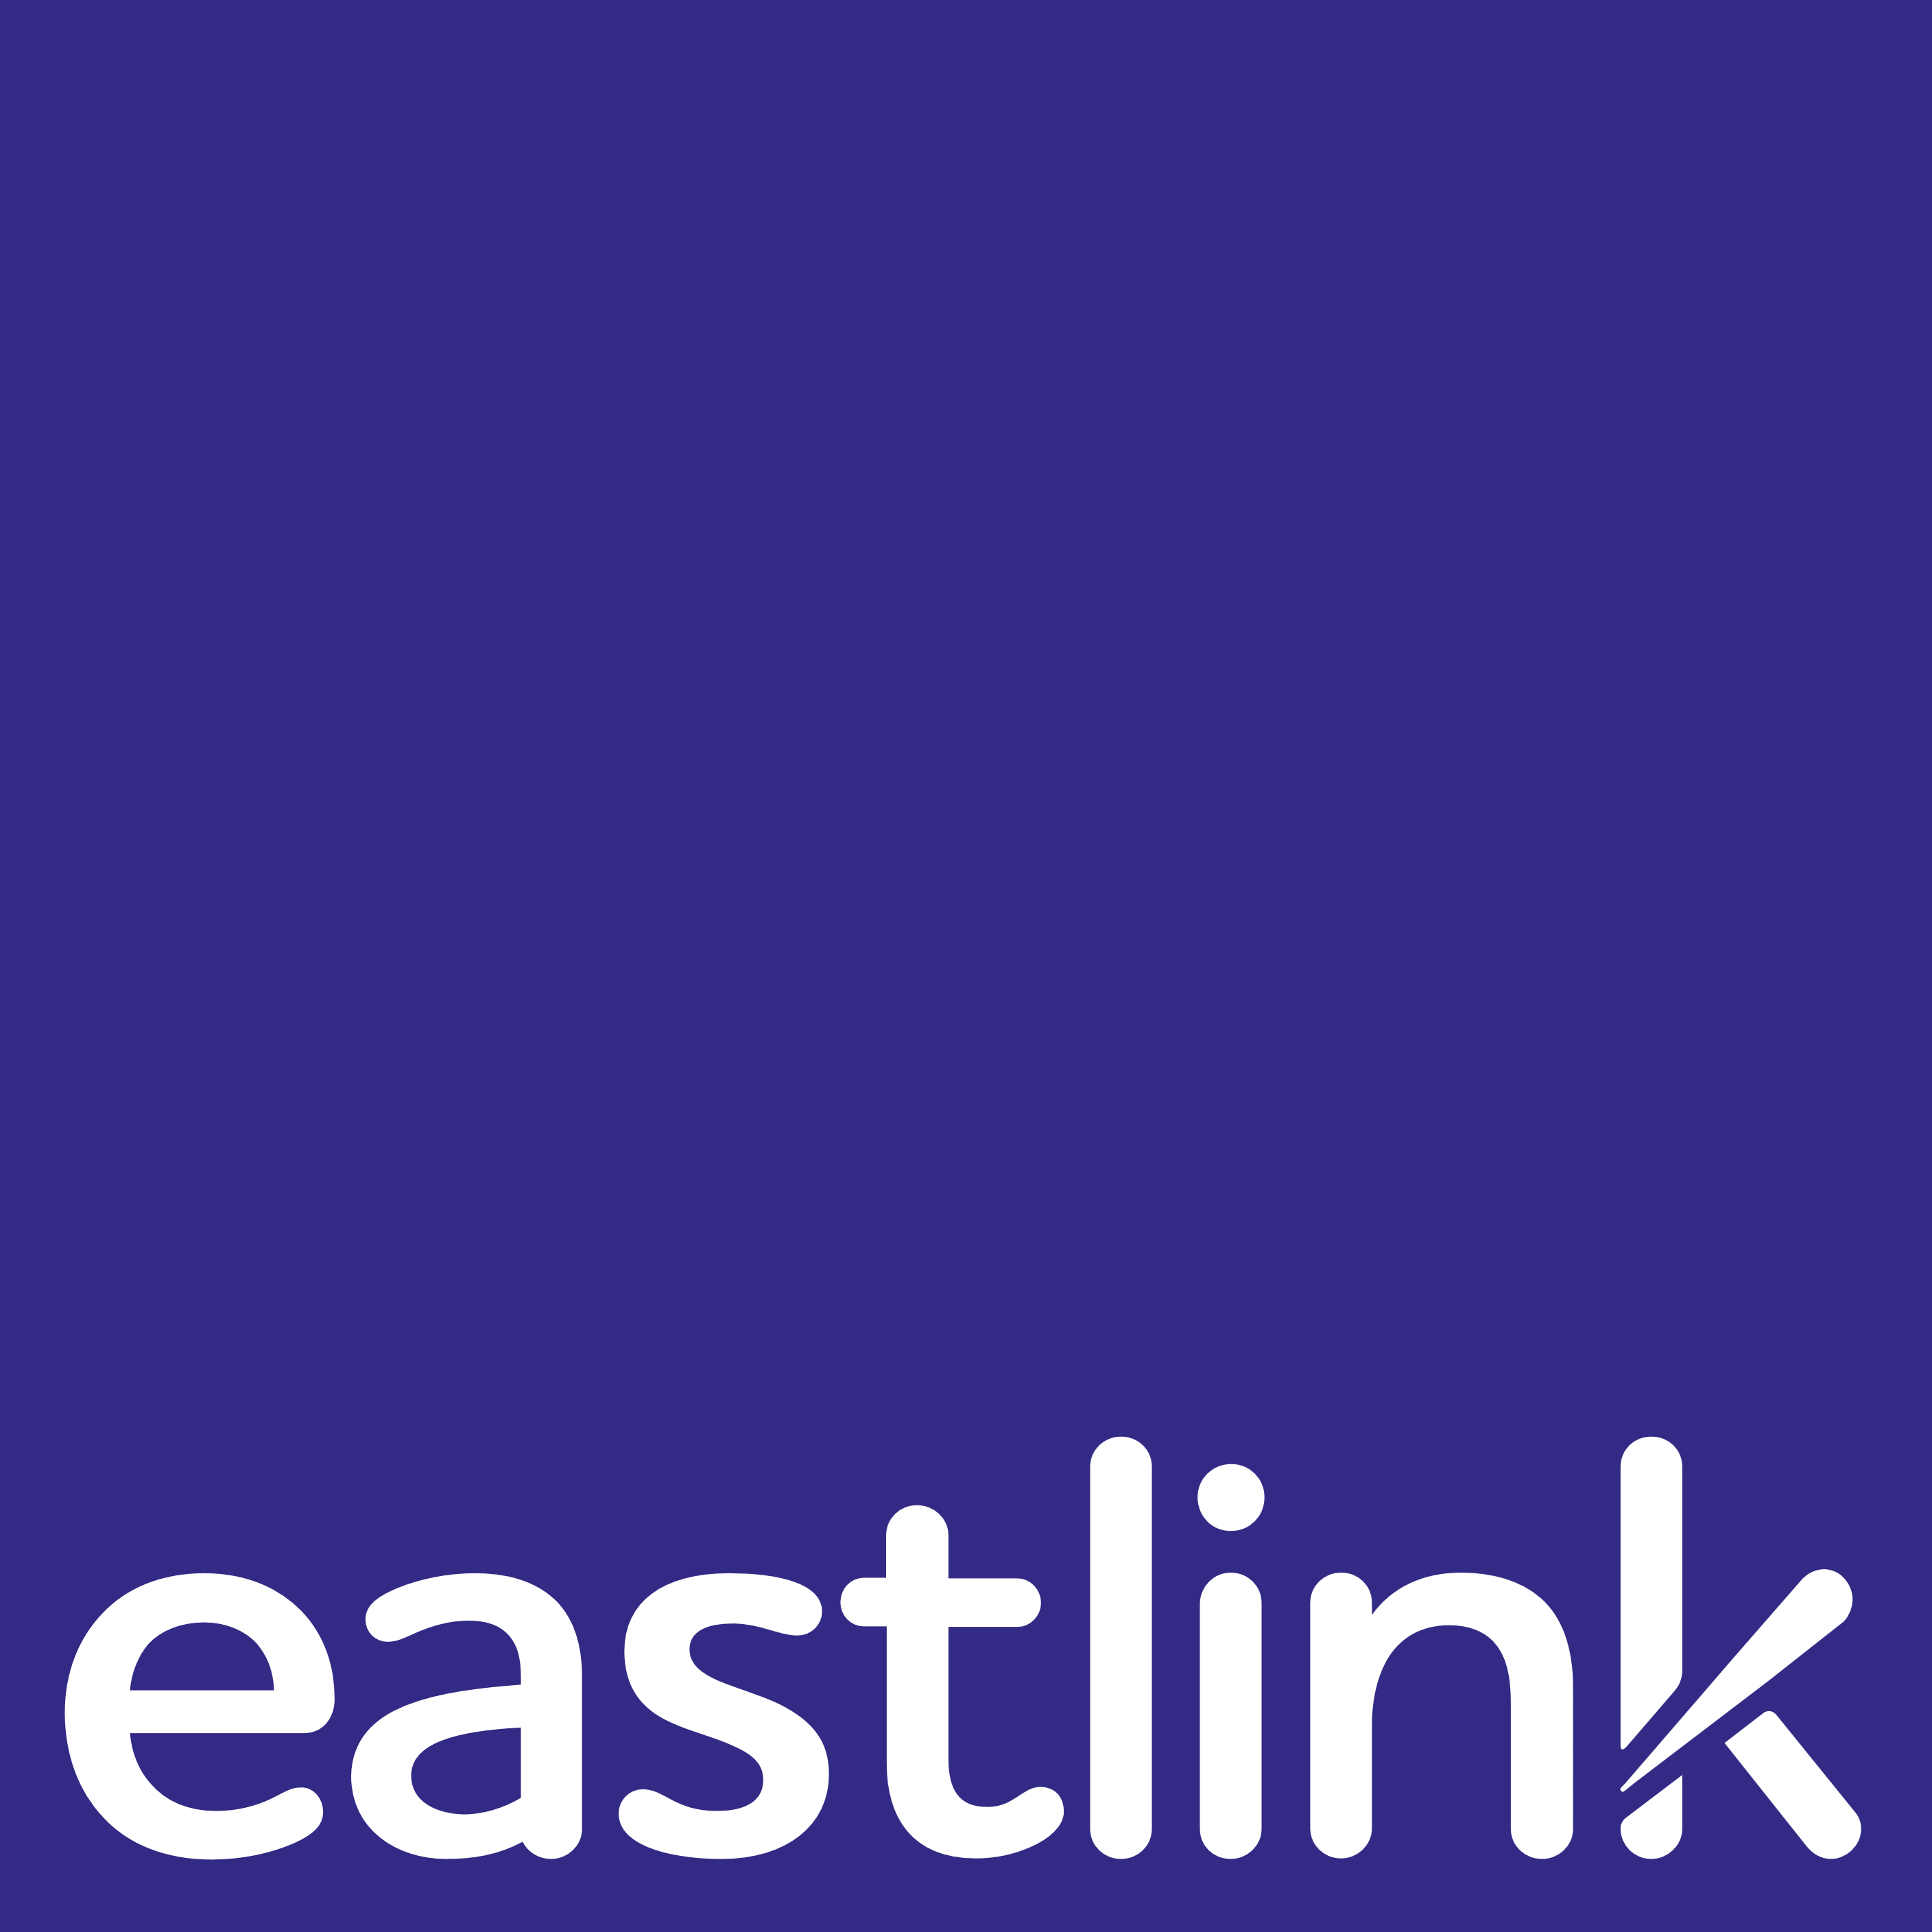 Eastlink logo, logotype